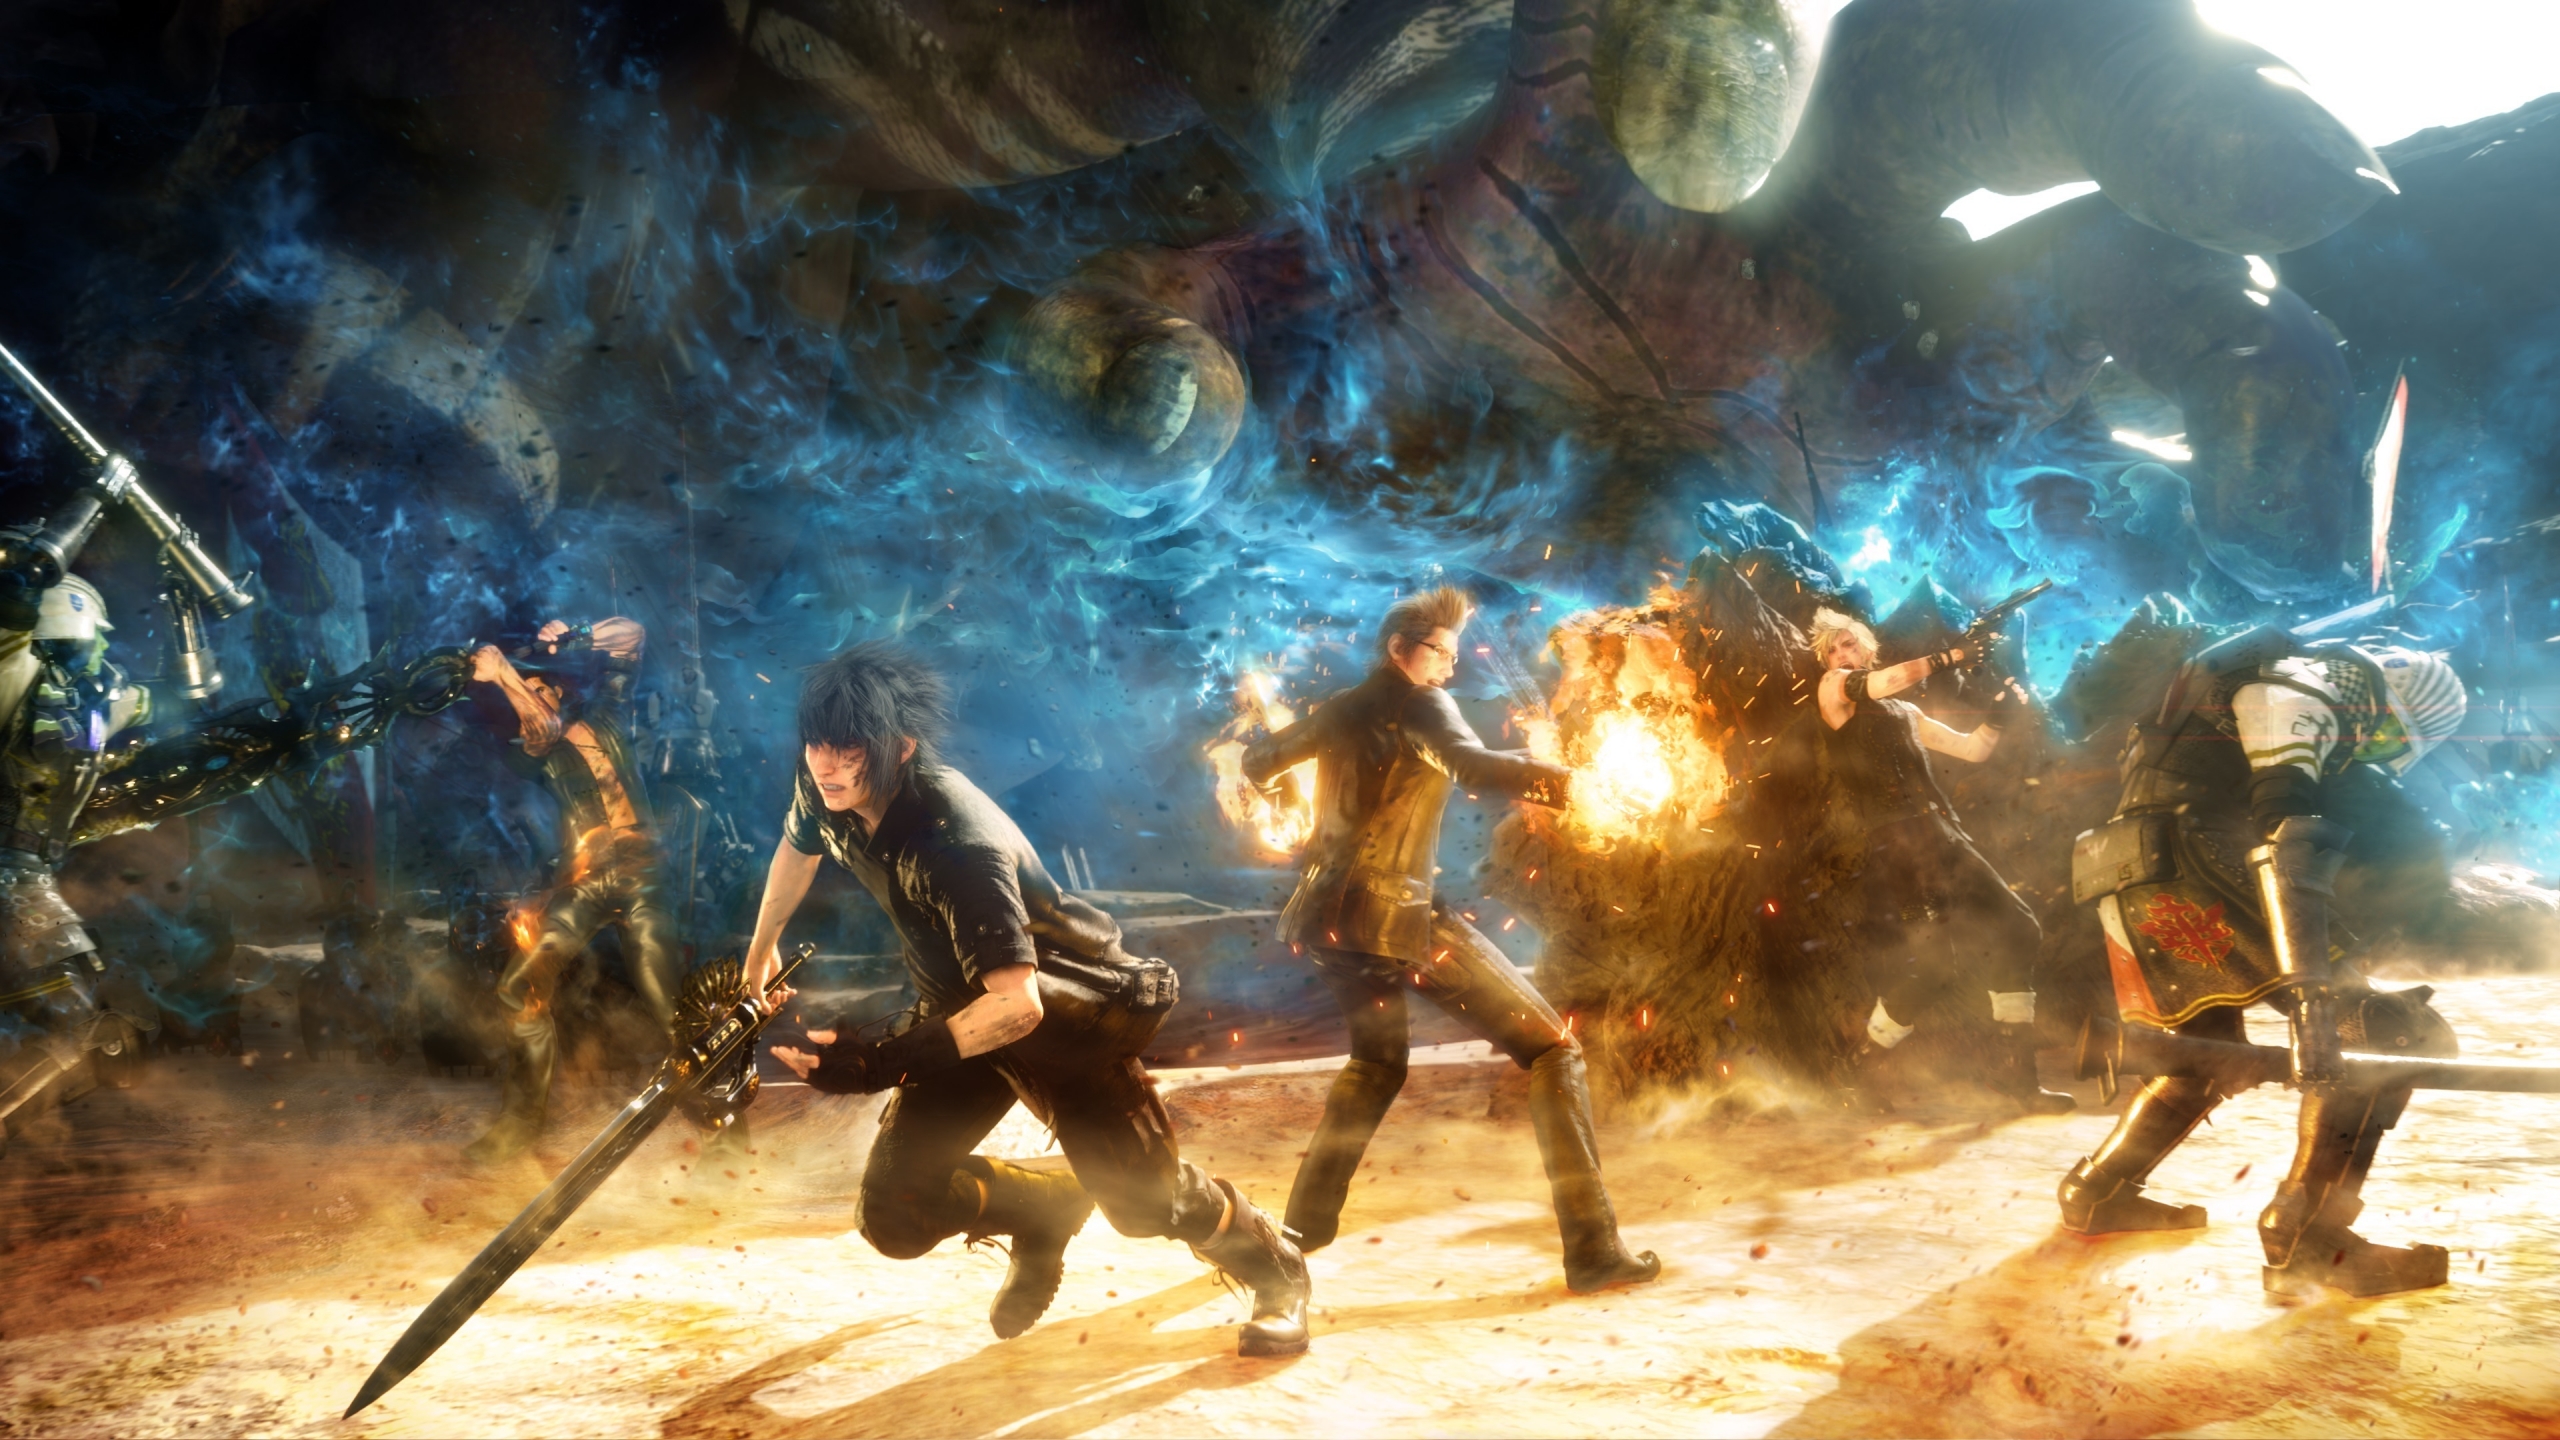 Final Fantasy V Battle for 2560x1440 HDTV resolution